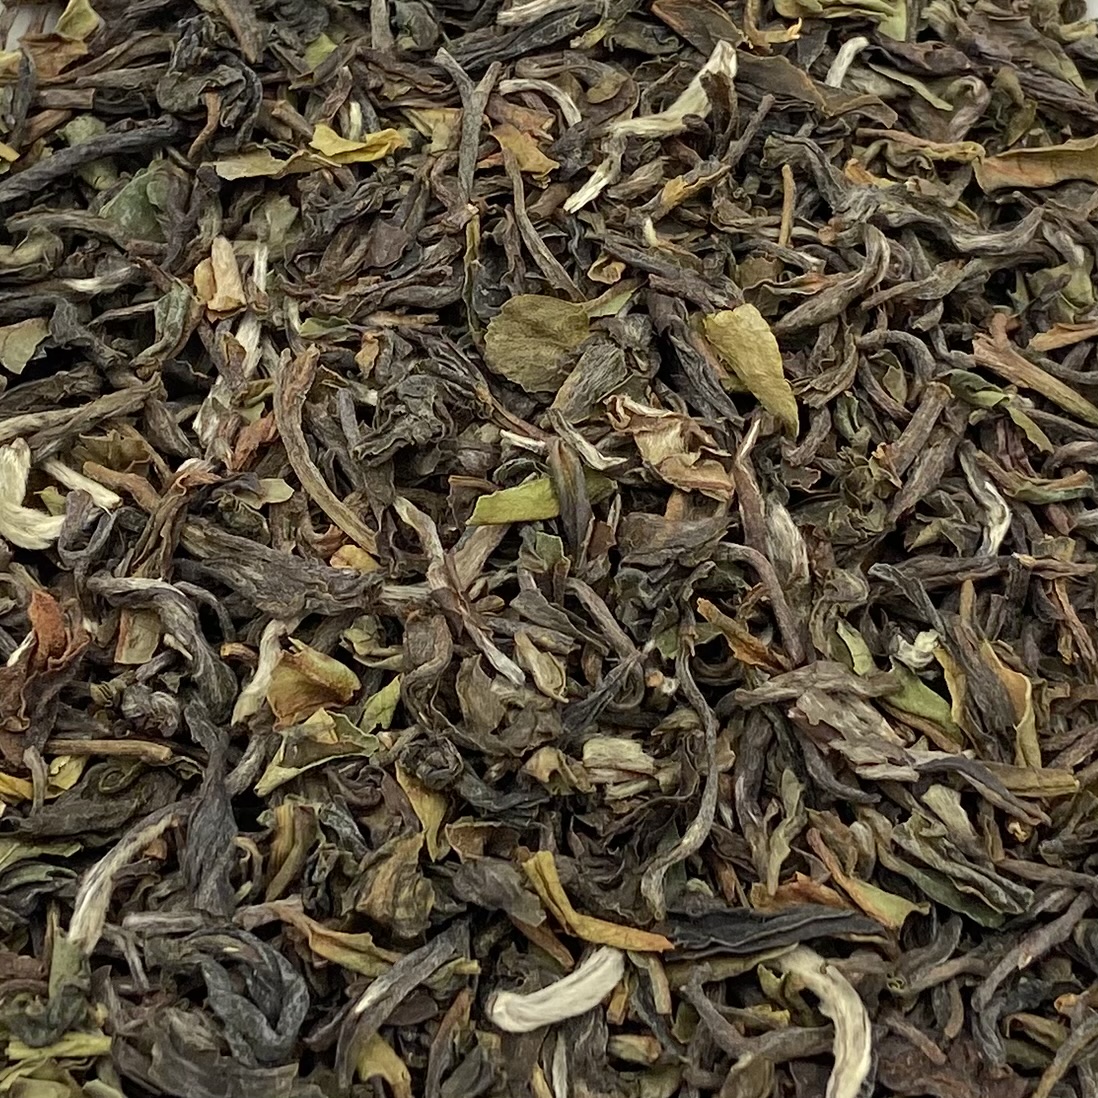 Thé noir - Darjeeling de printemps 2022